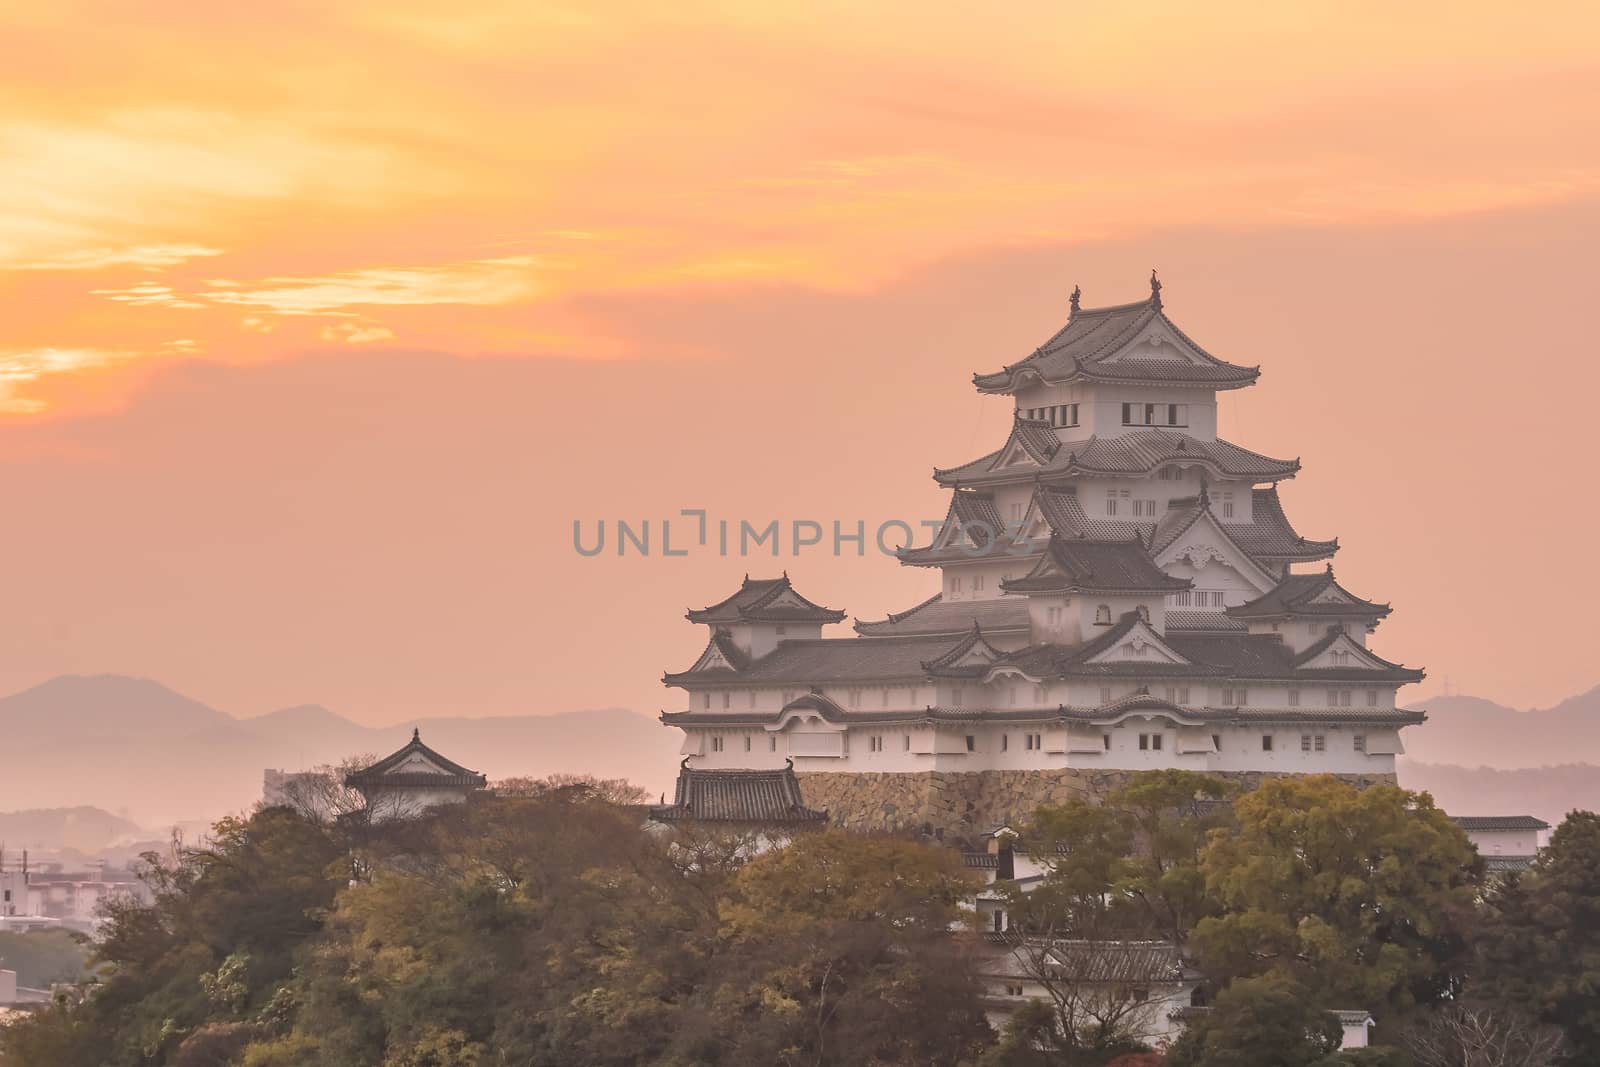 View of Himeji Castle (autumn season) in Japan by f11photo